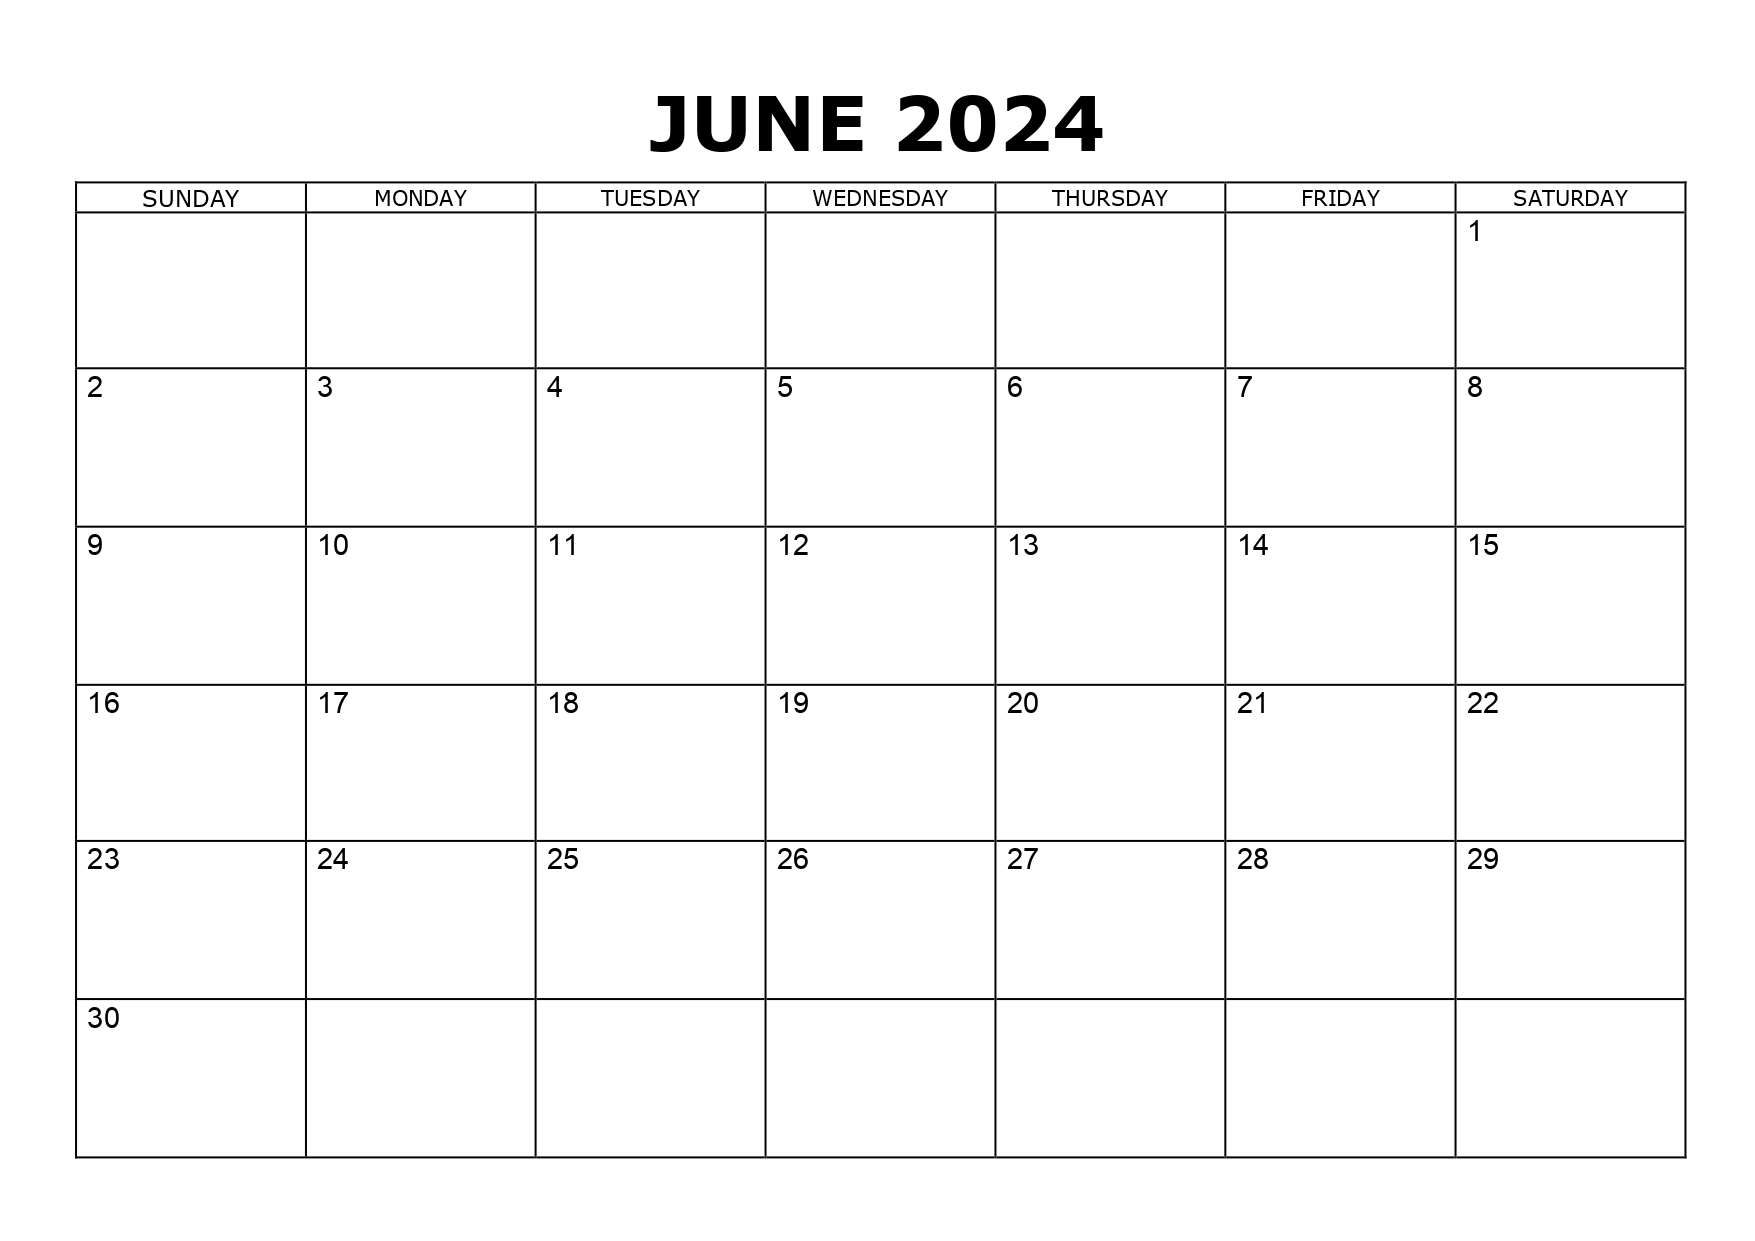 June Printable Calendar Templates 2024: 7 Designs in JPG & PDF Formats!